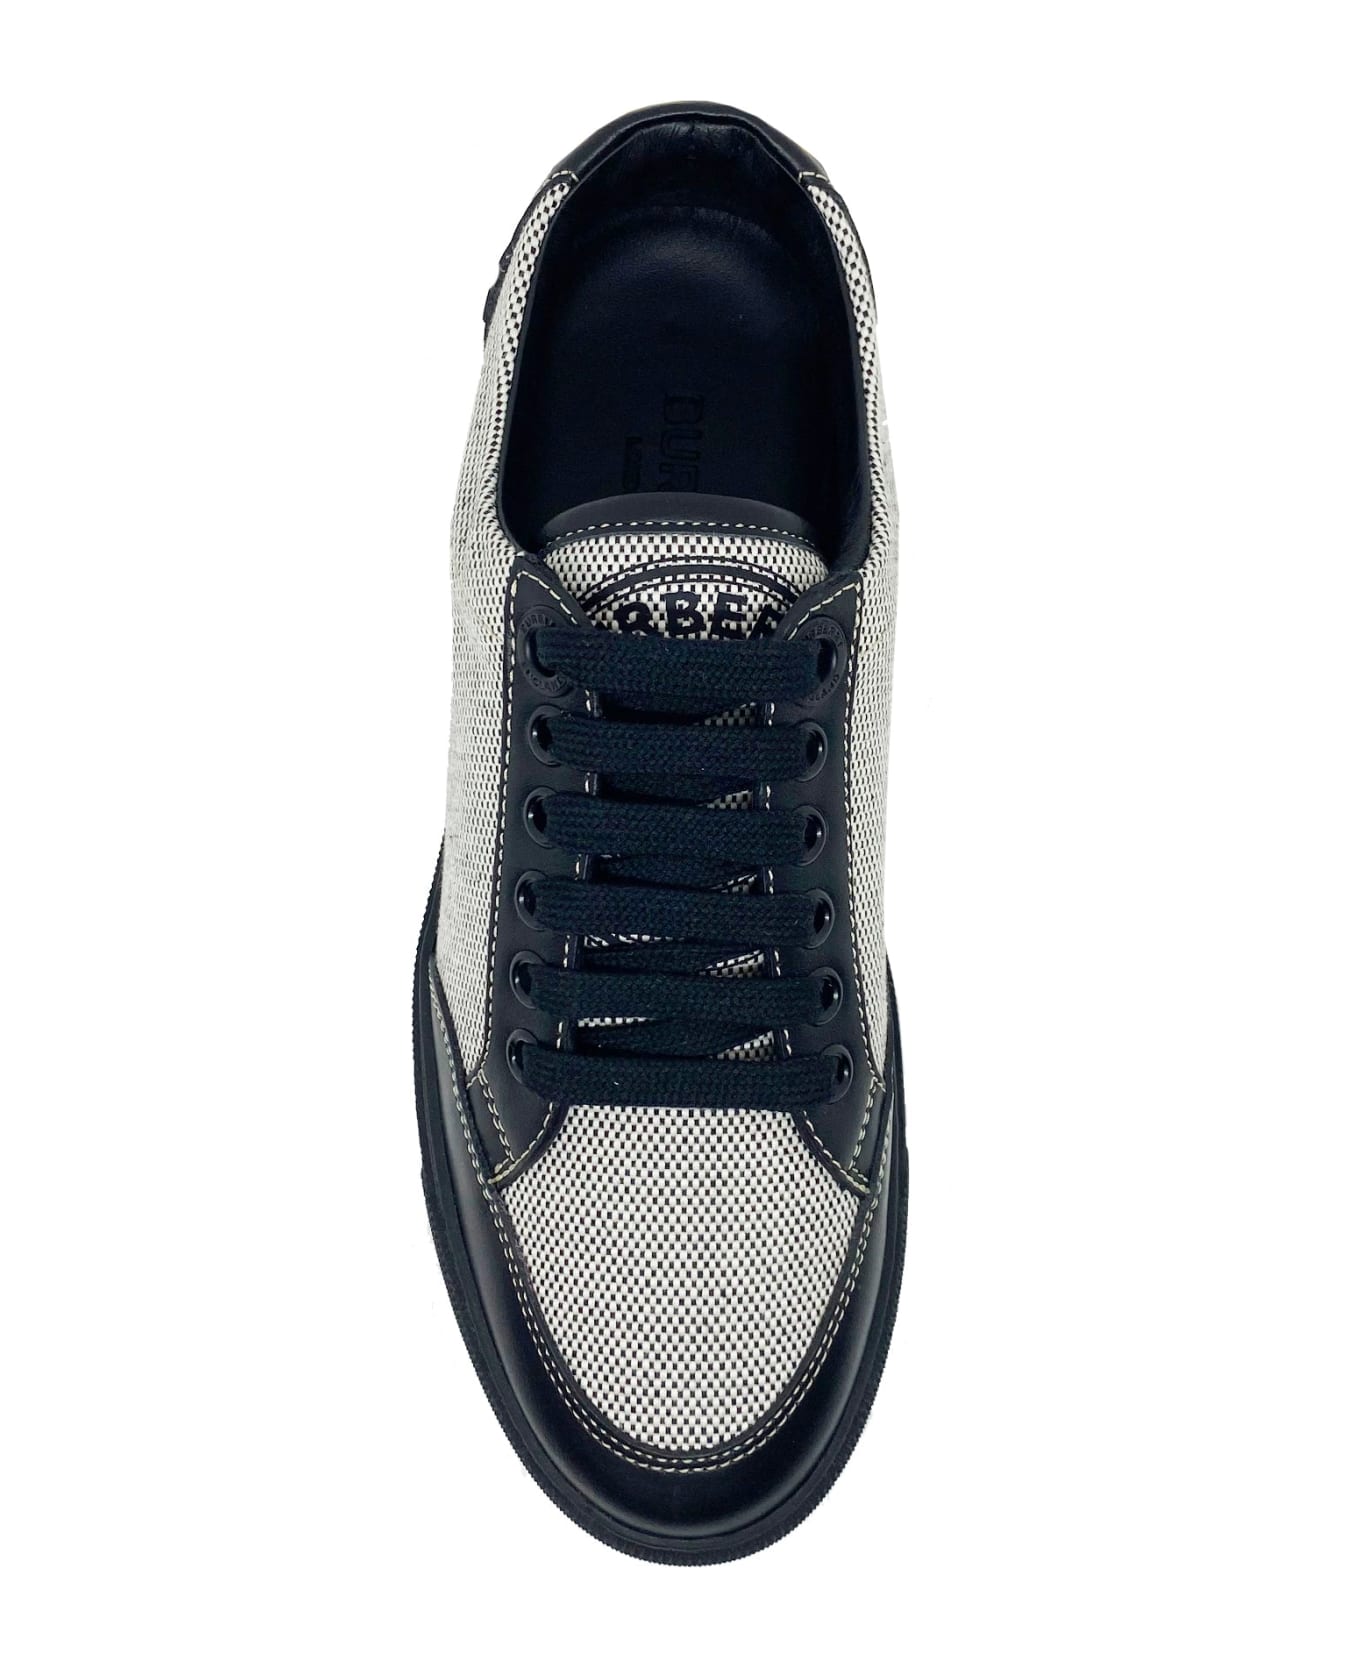 Burberry Logo Canvas Sneakers - Black スニーカー